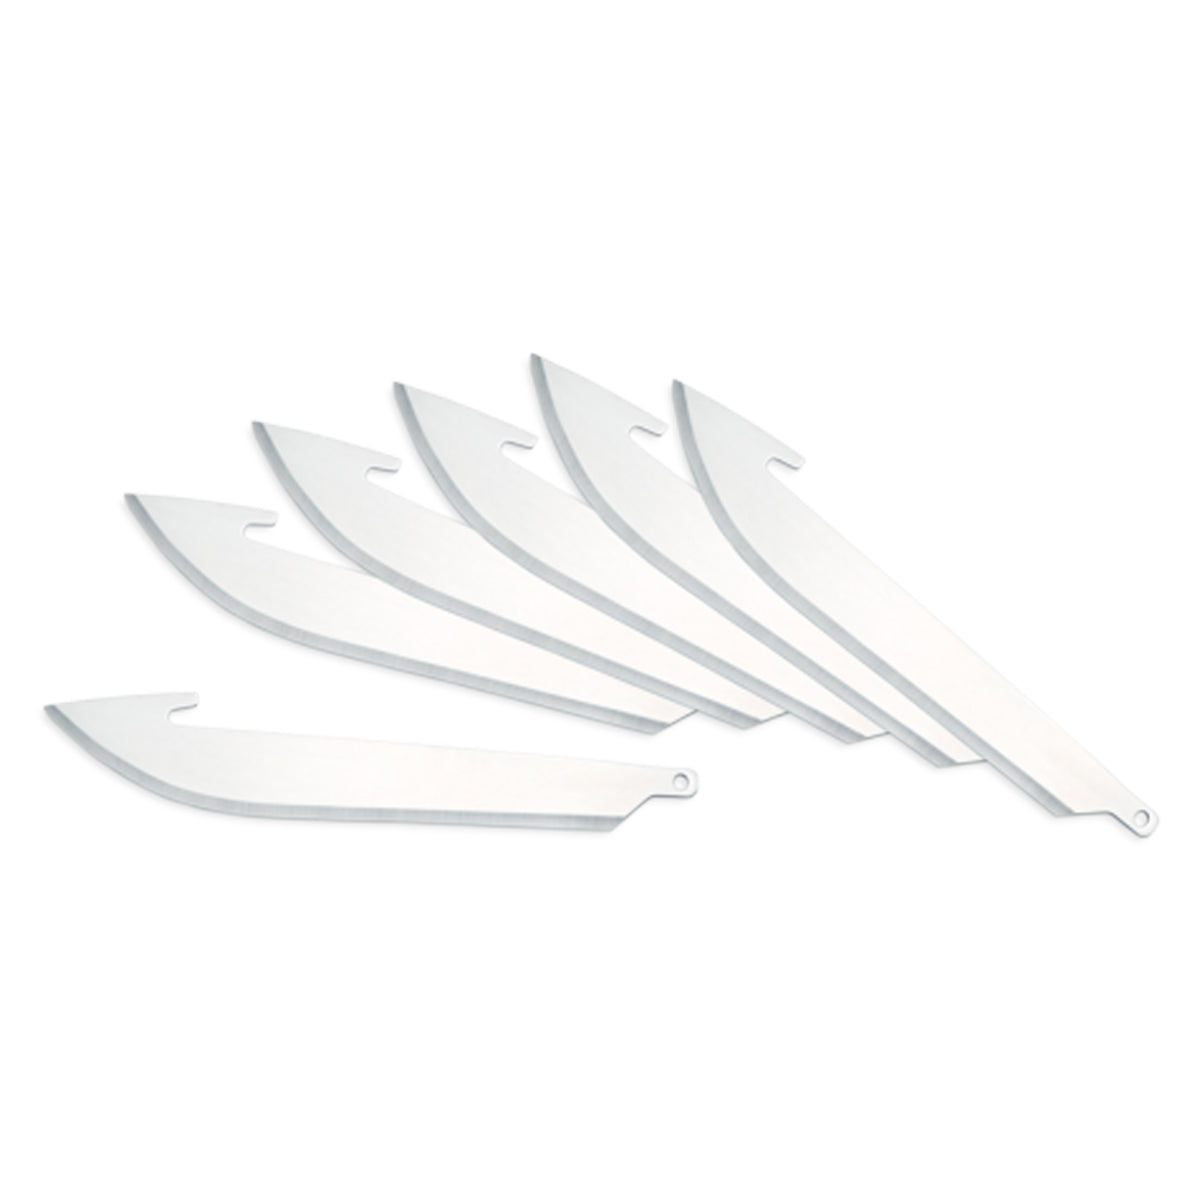 Outdoor Edge 3.5" RazorBlaze Replacement Blades - 6 Pack by Outdoor Edge | Gear - goHUNT Shop